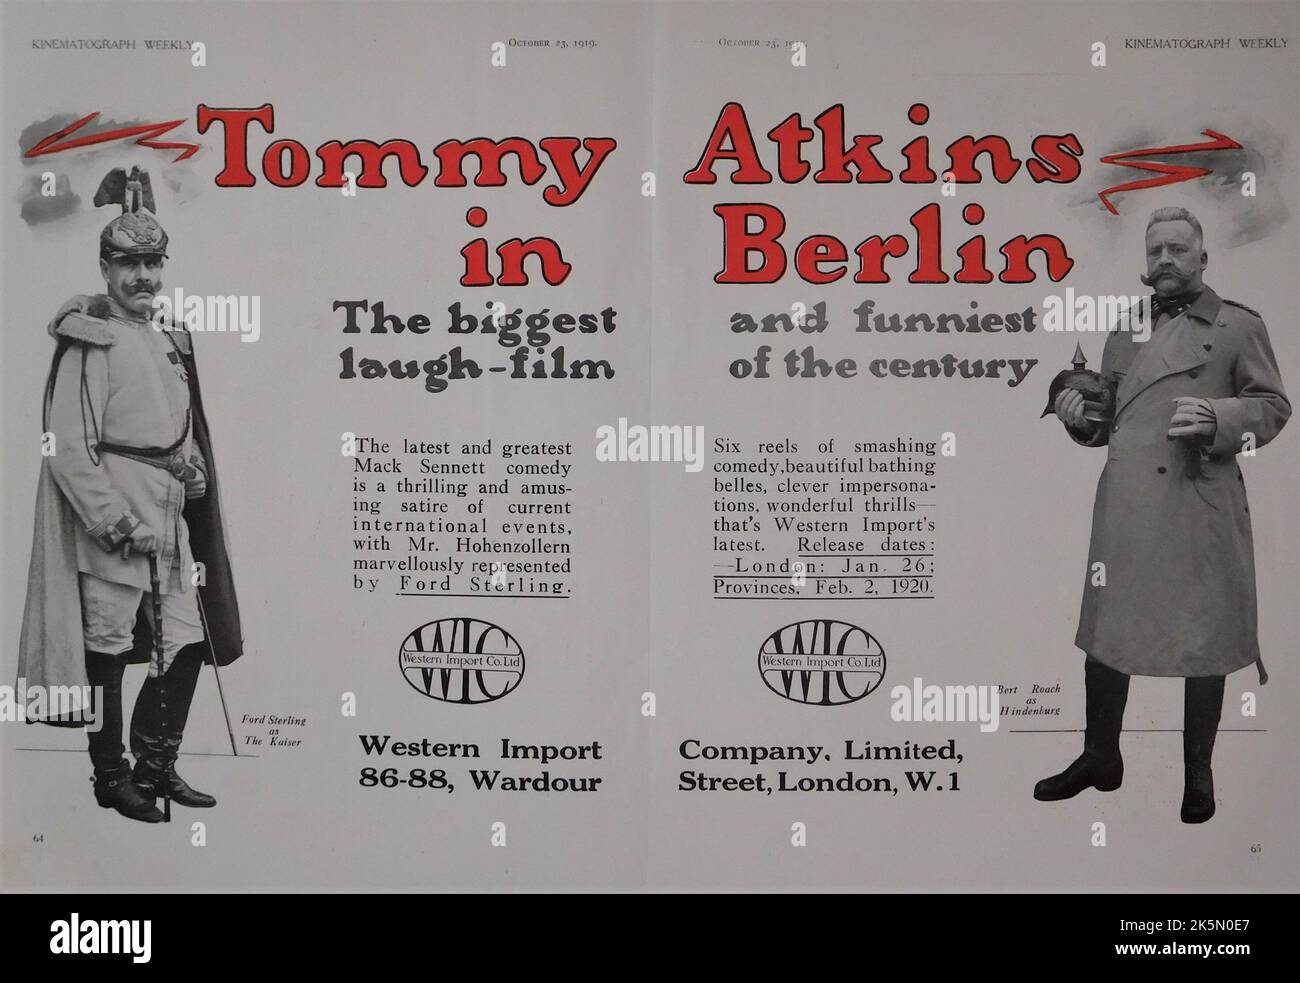 FORD STERLING come Kaiser Bill e BERT ROACH come von Hindenburg nella commedia TOMMY ATKINS A BERLINO (UK) / YANKEE DOODLE A BERLINO (US) 1919 regista F. RICHARD JONES storia Mack Sennett Mack Sennett commedie / Western Import Company Limited (UK) Foto Stock